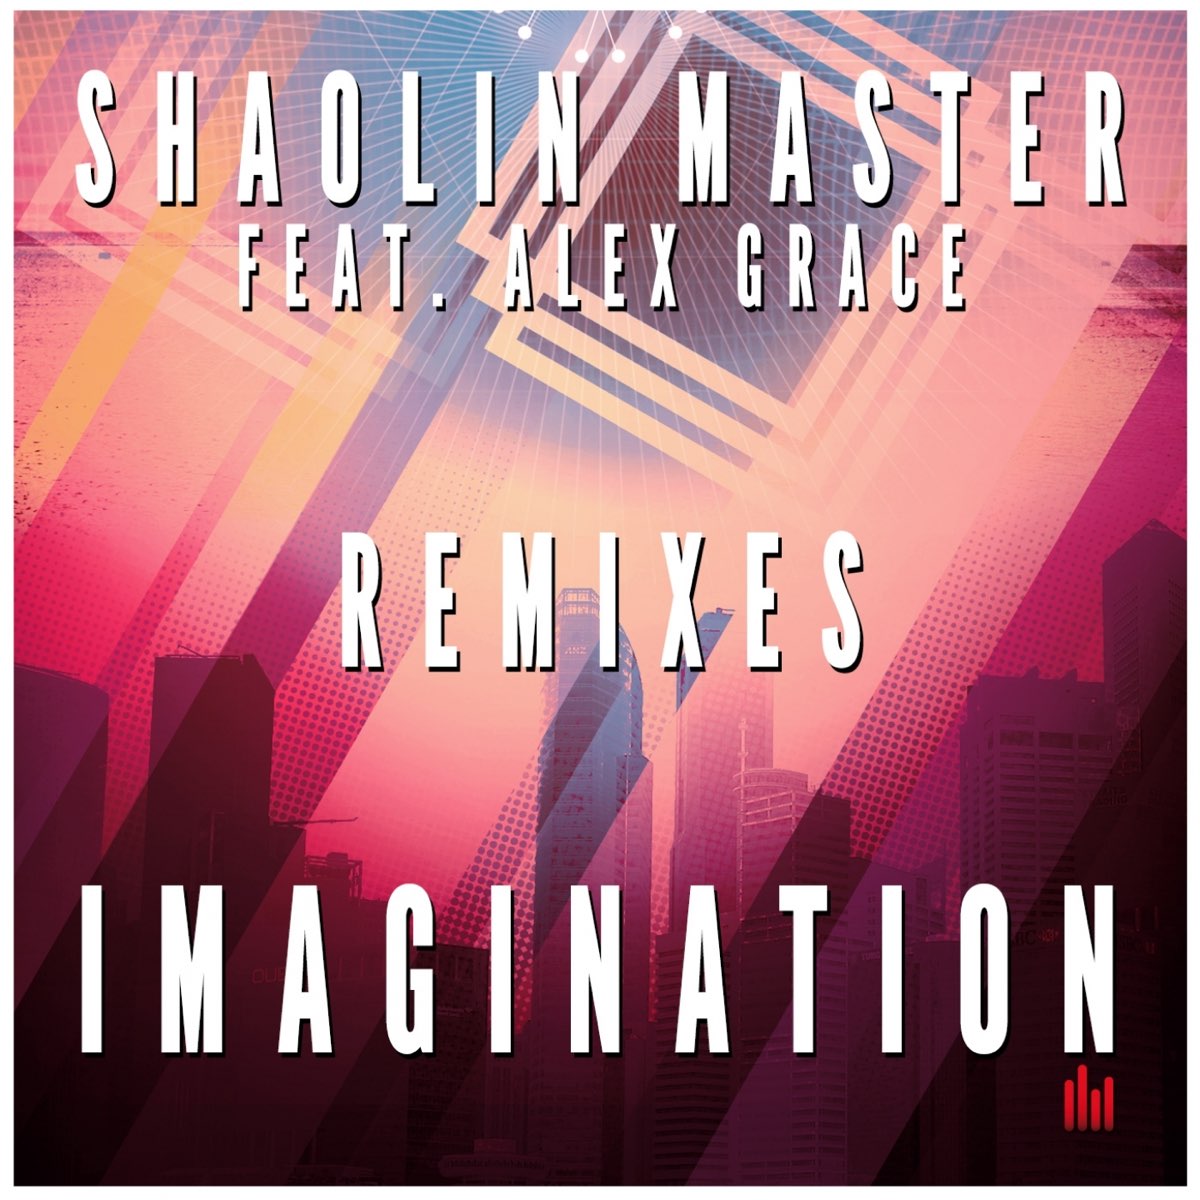 Imagination feat. Imagine the Remixes. Avenue-imagination (Extended Version). Master imagine.